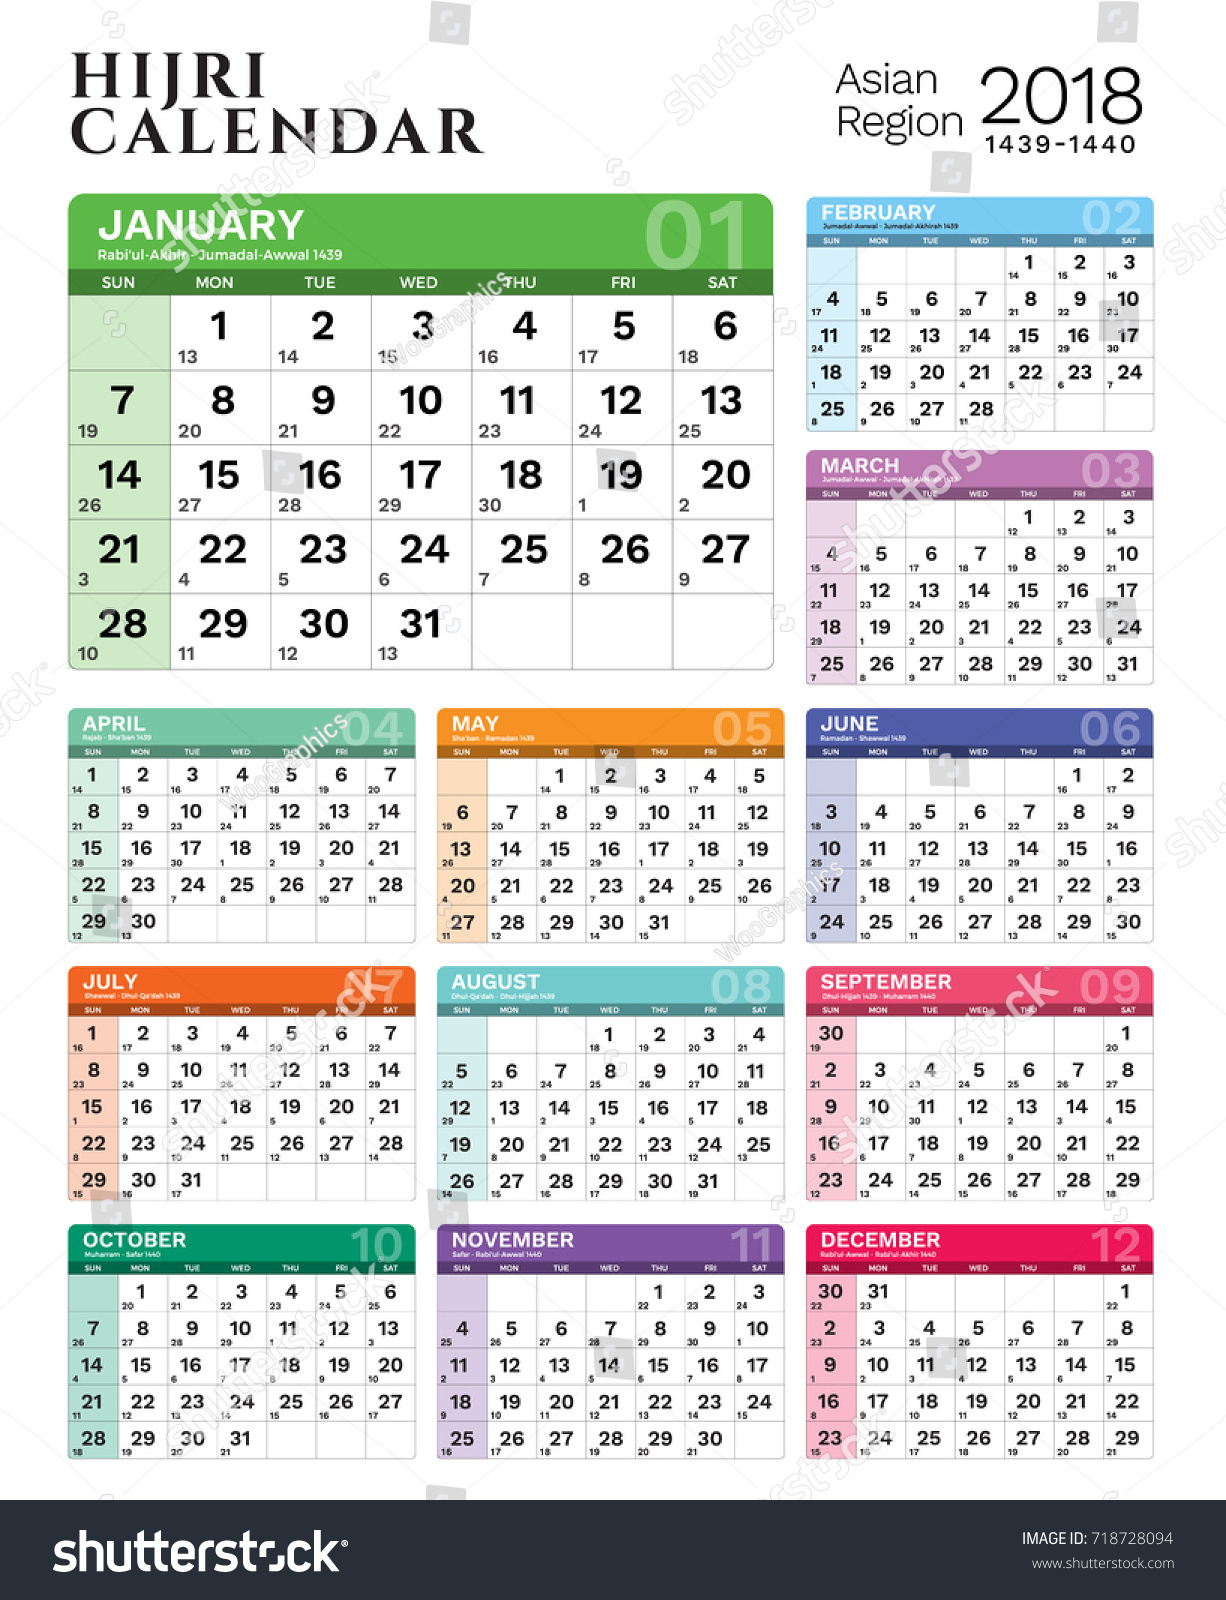 2018 Islamic Hijri Calendar Template Design Stock Vector 718728094